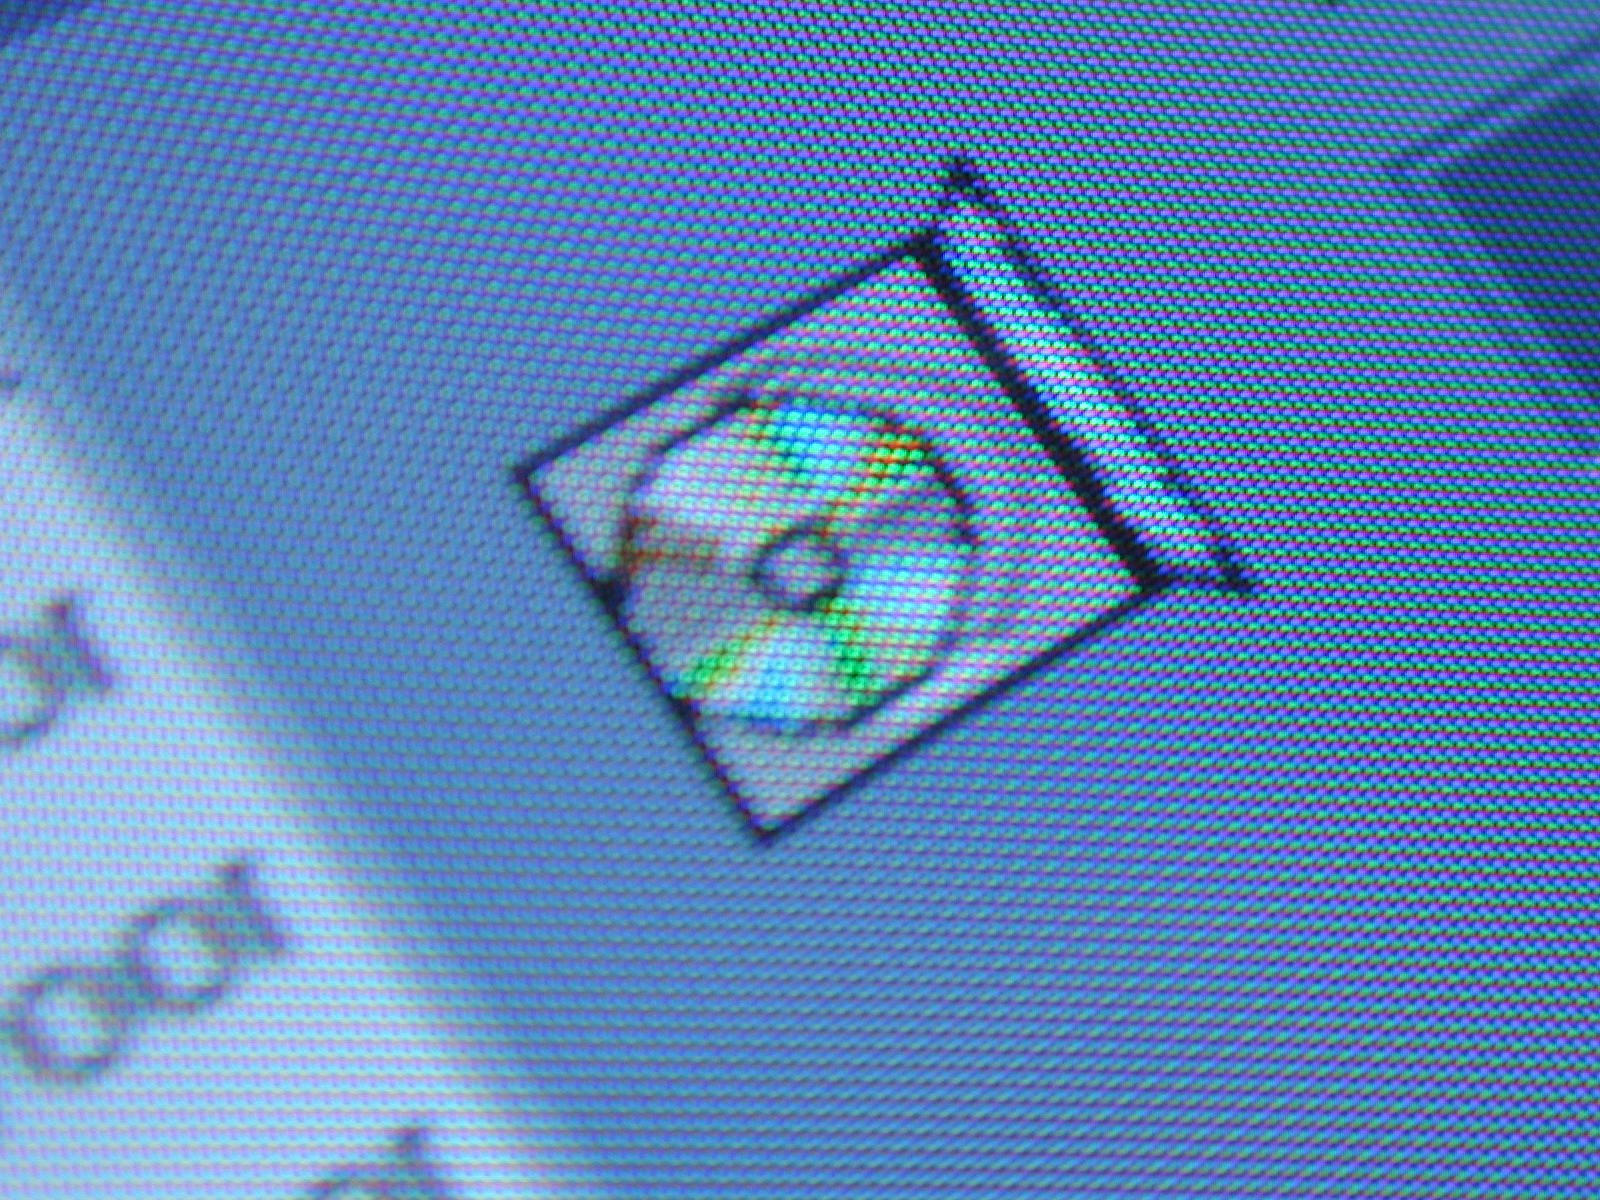 icon disc cd compactdisc compact monitor computer screen light_fx lightfx bites bits rgb pixel pixels pixelated